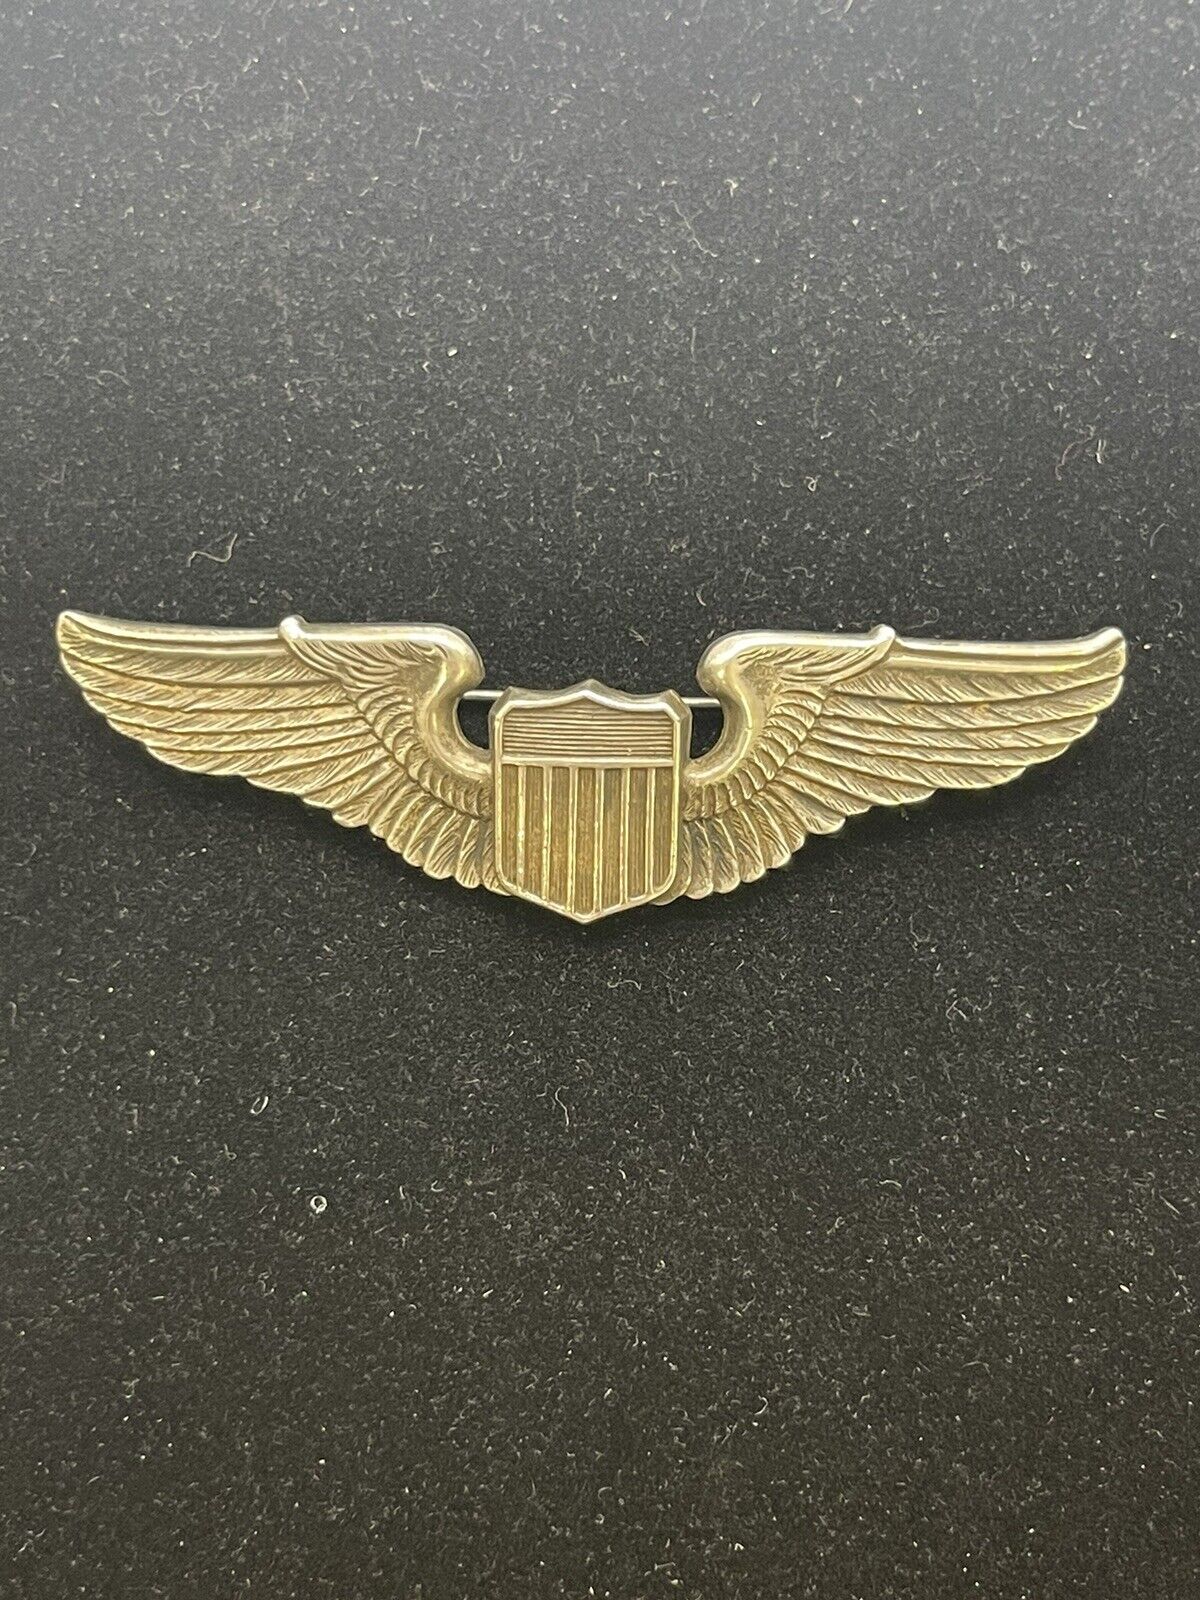 Air Force Sterling Silver Wings pin 17 Grams 